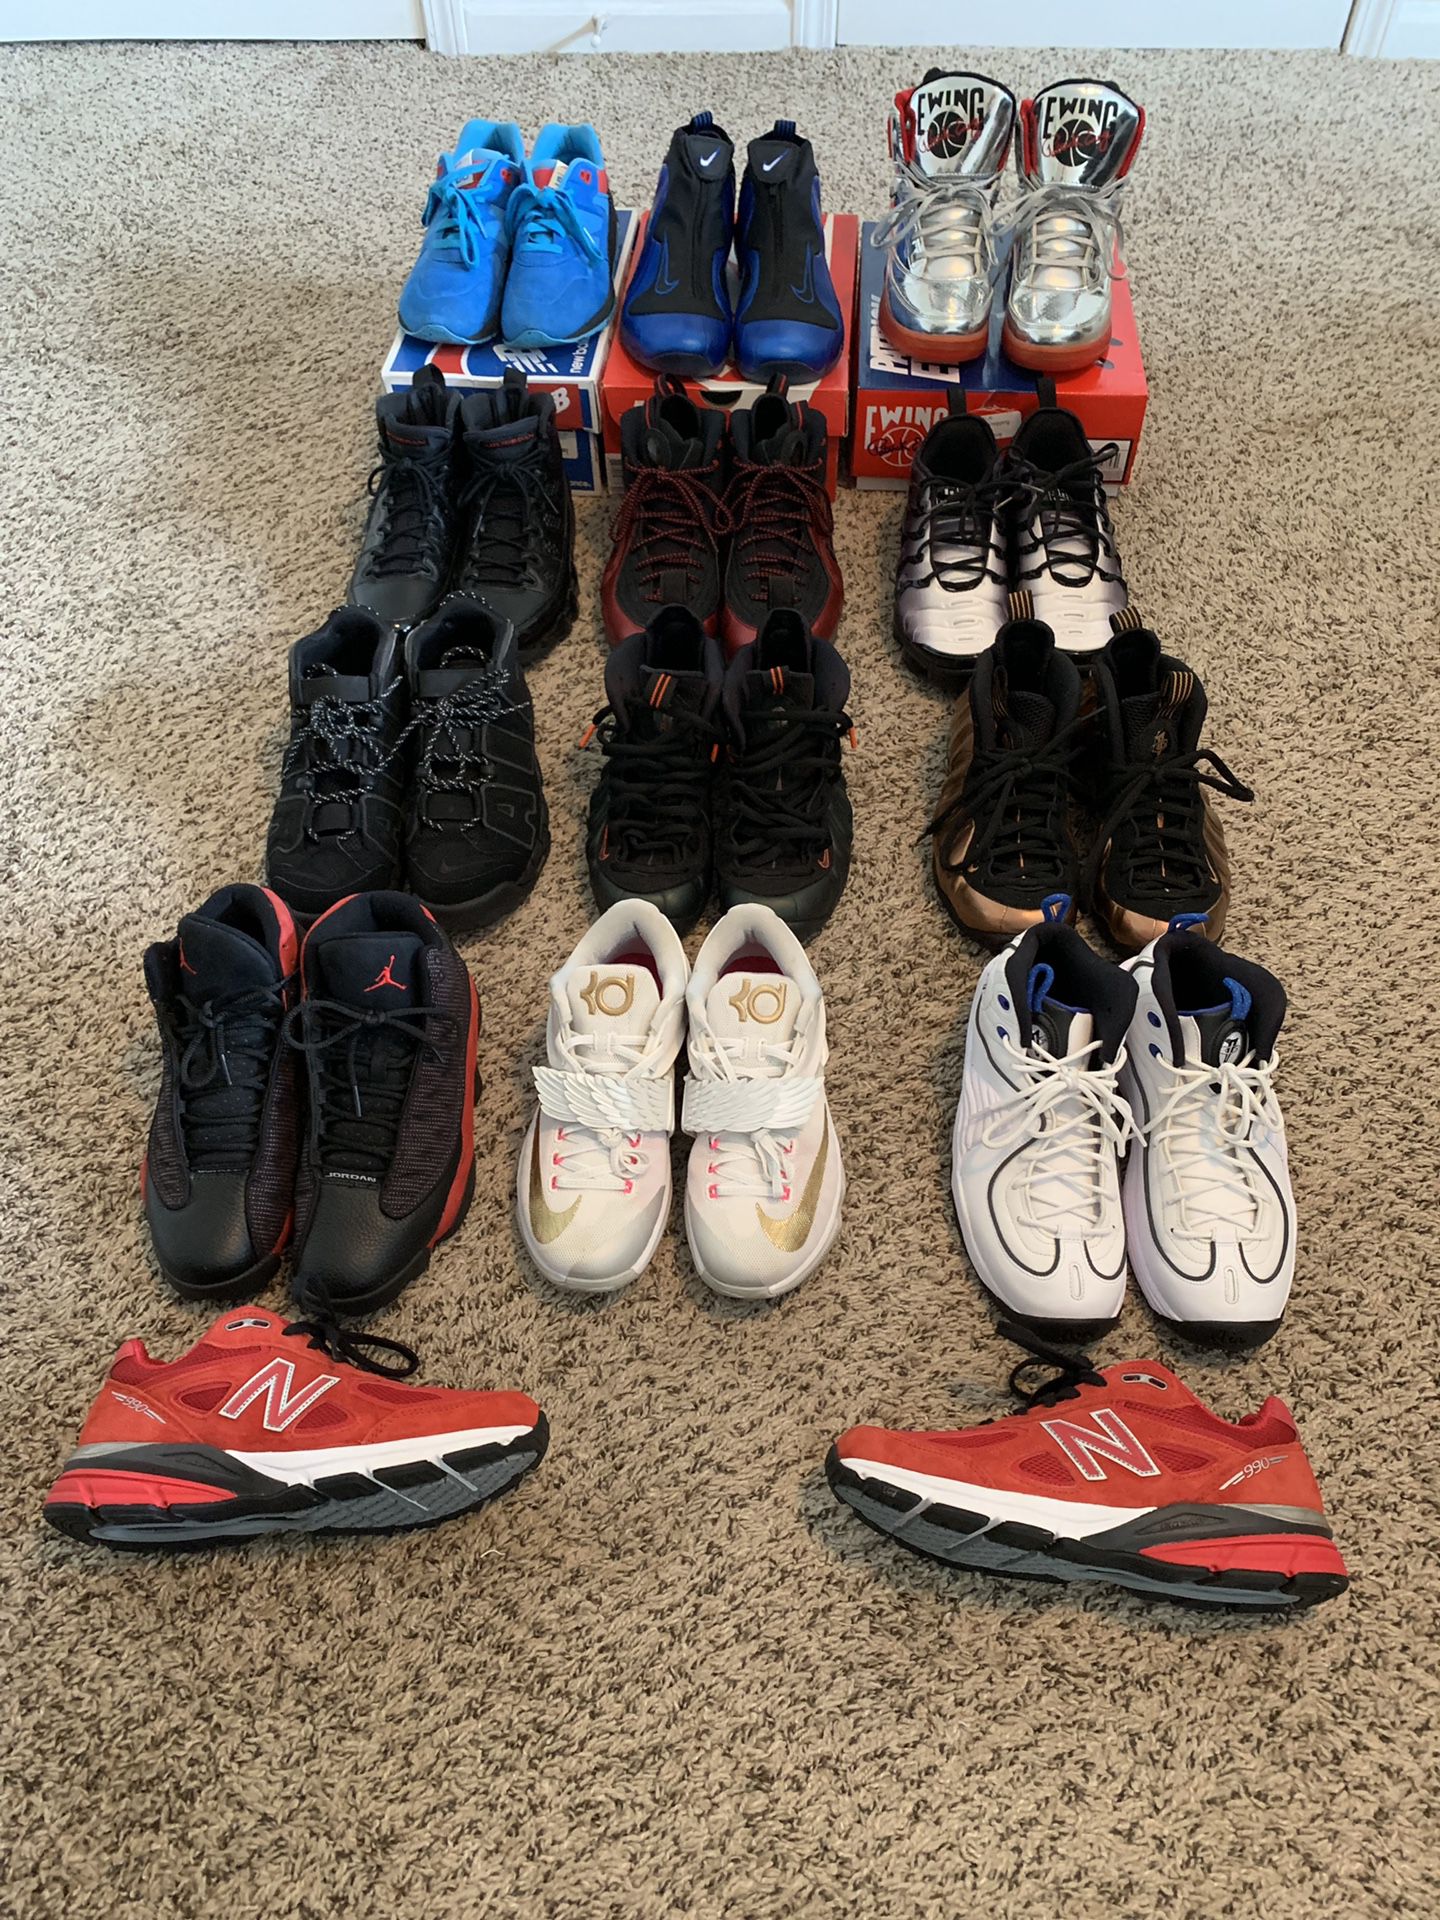 Jordans, Nikes, and New Balances sizes 7.5-8.5